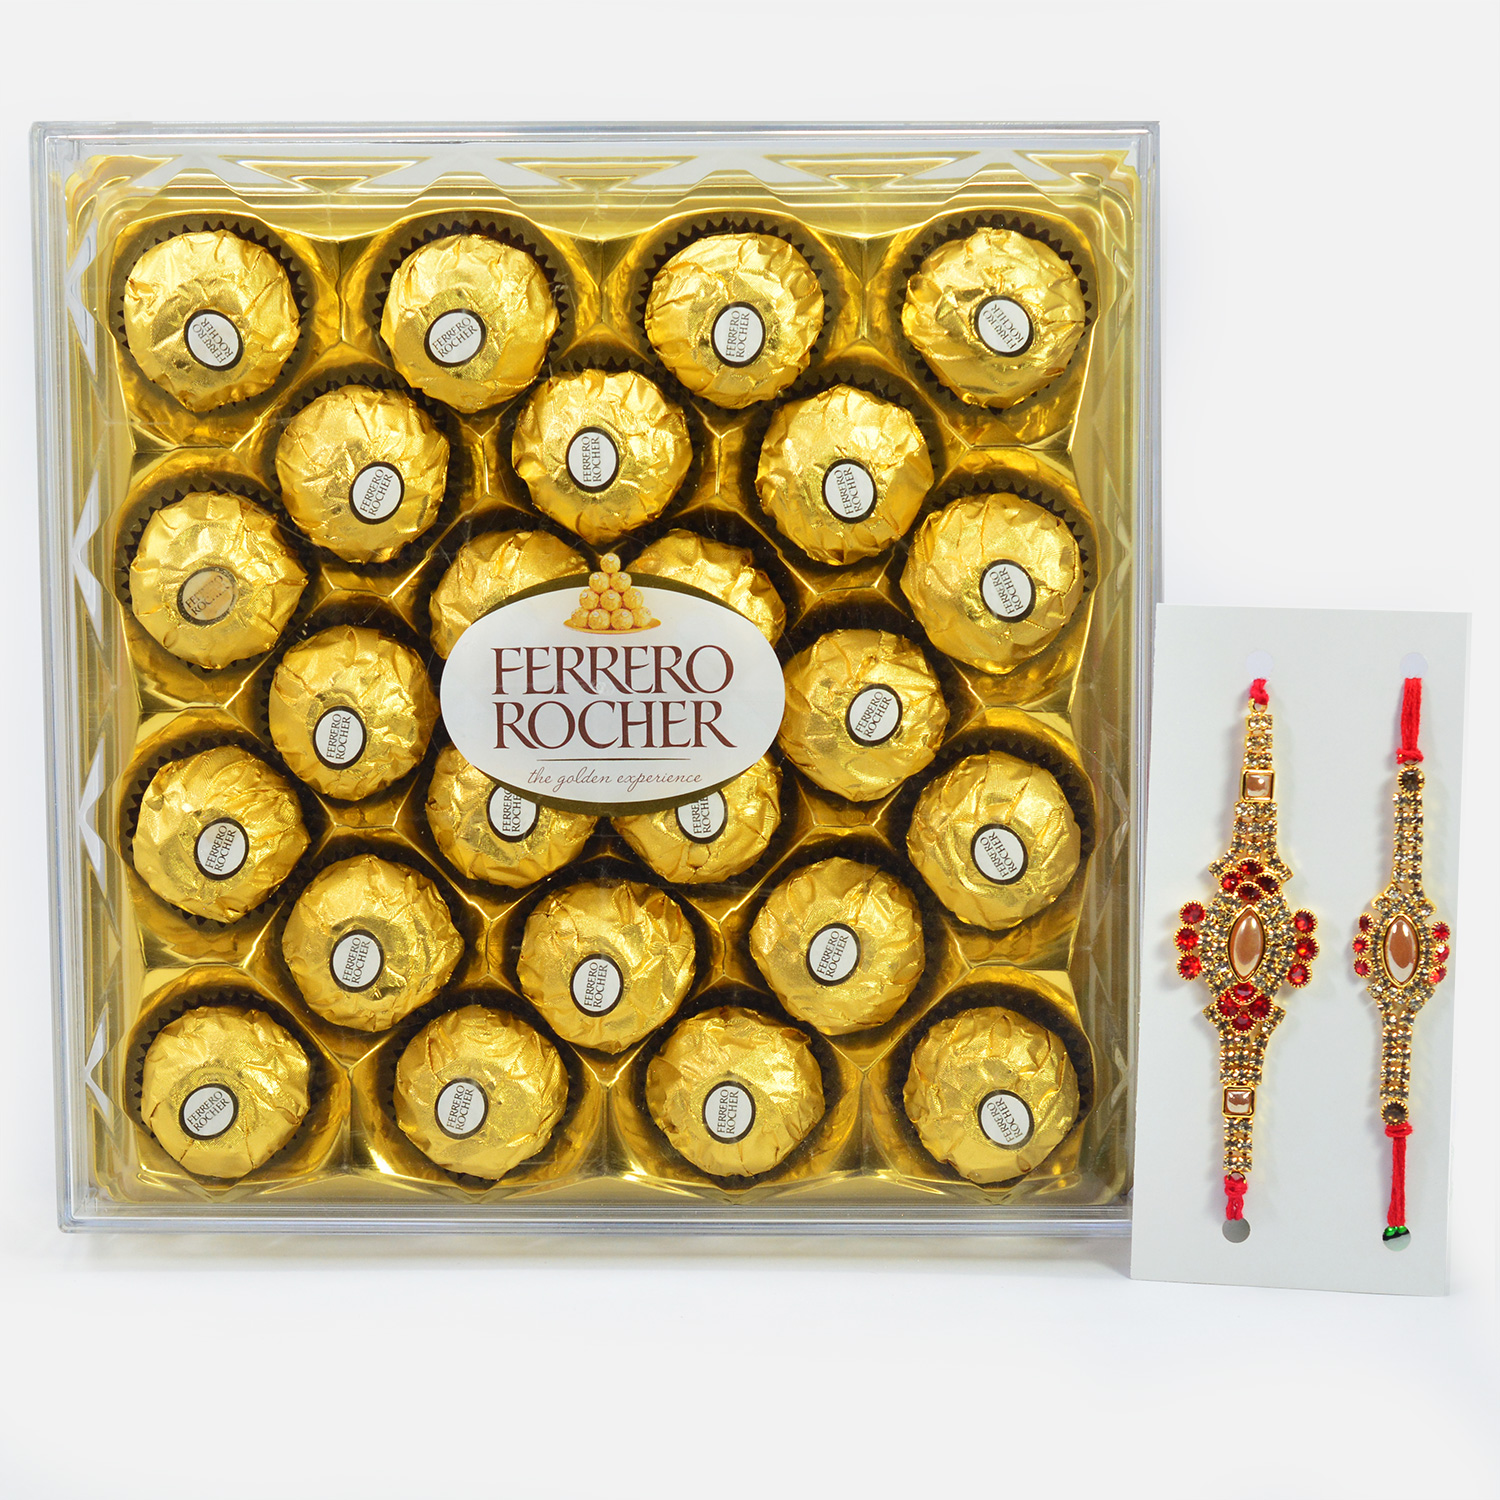 Two Jewel Amazing Looking Brother Rakhis with 24 Pc Ferrero Rocher Chocolate